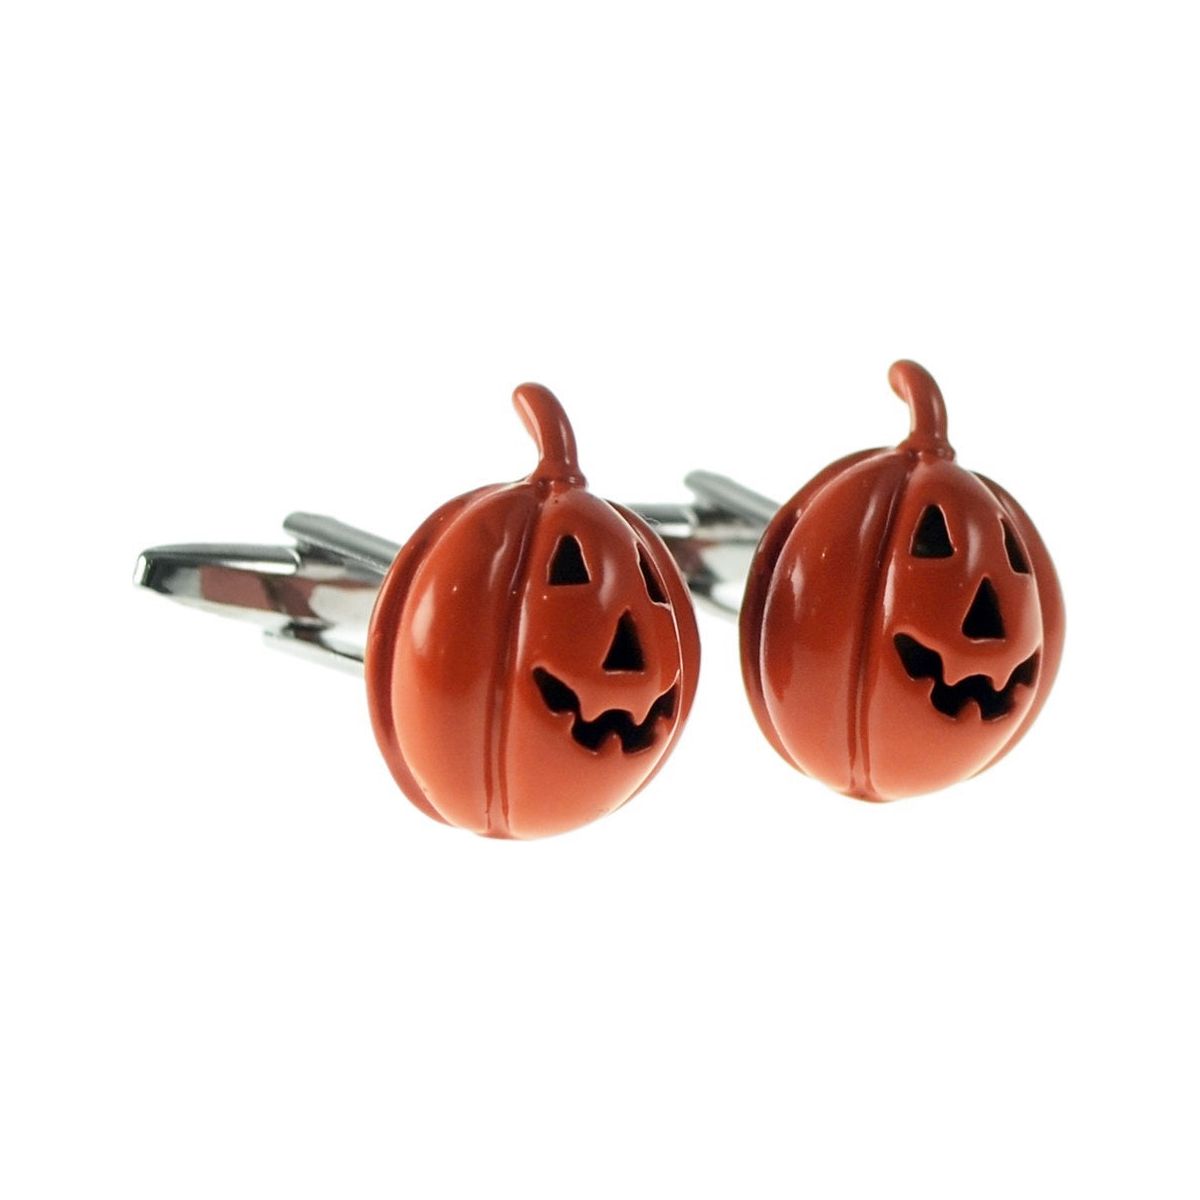 Spooky Pumpkins Cufflinks - Ashton and Finch